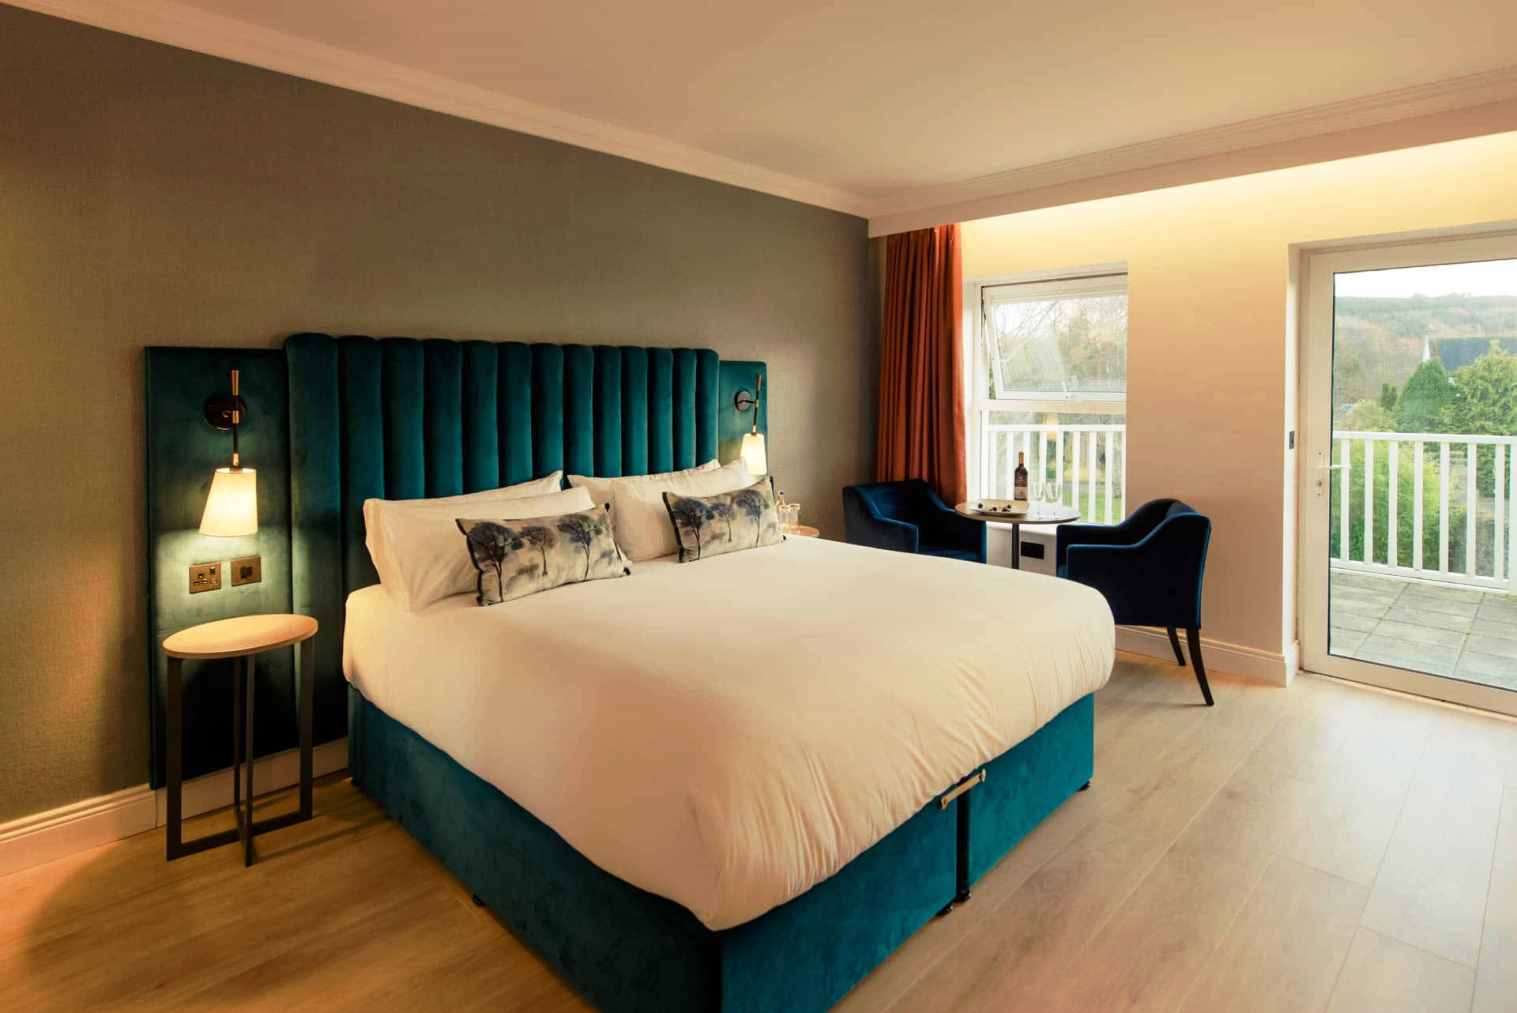 Tulfarris Hotel Golf Resort Bedroom